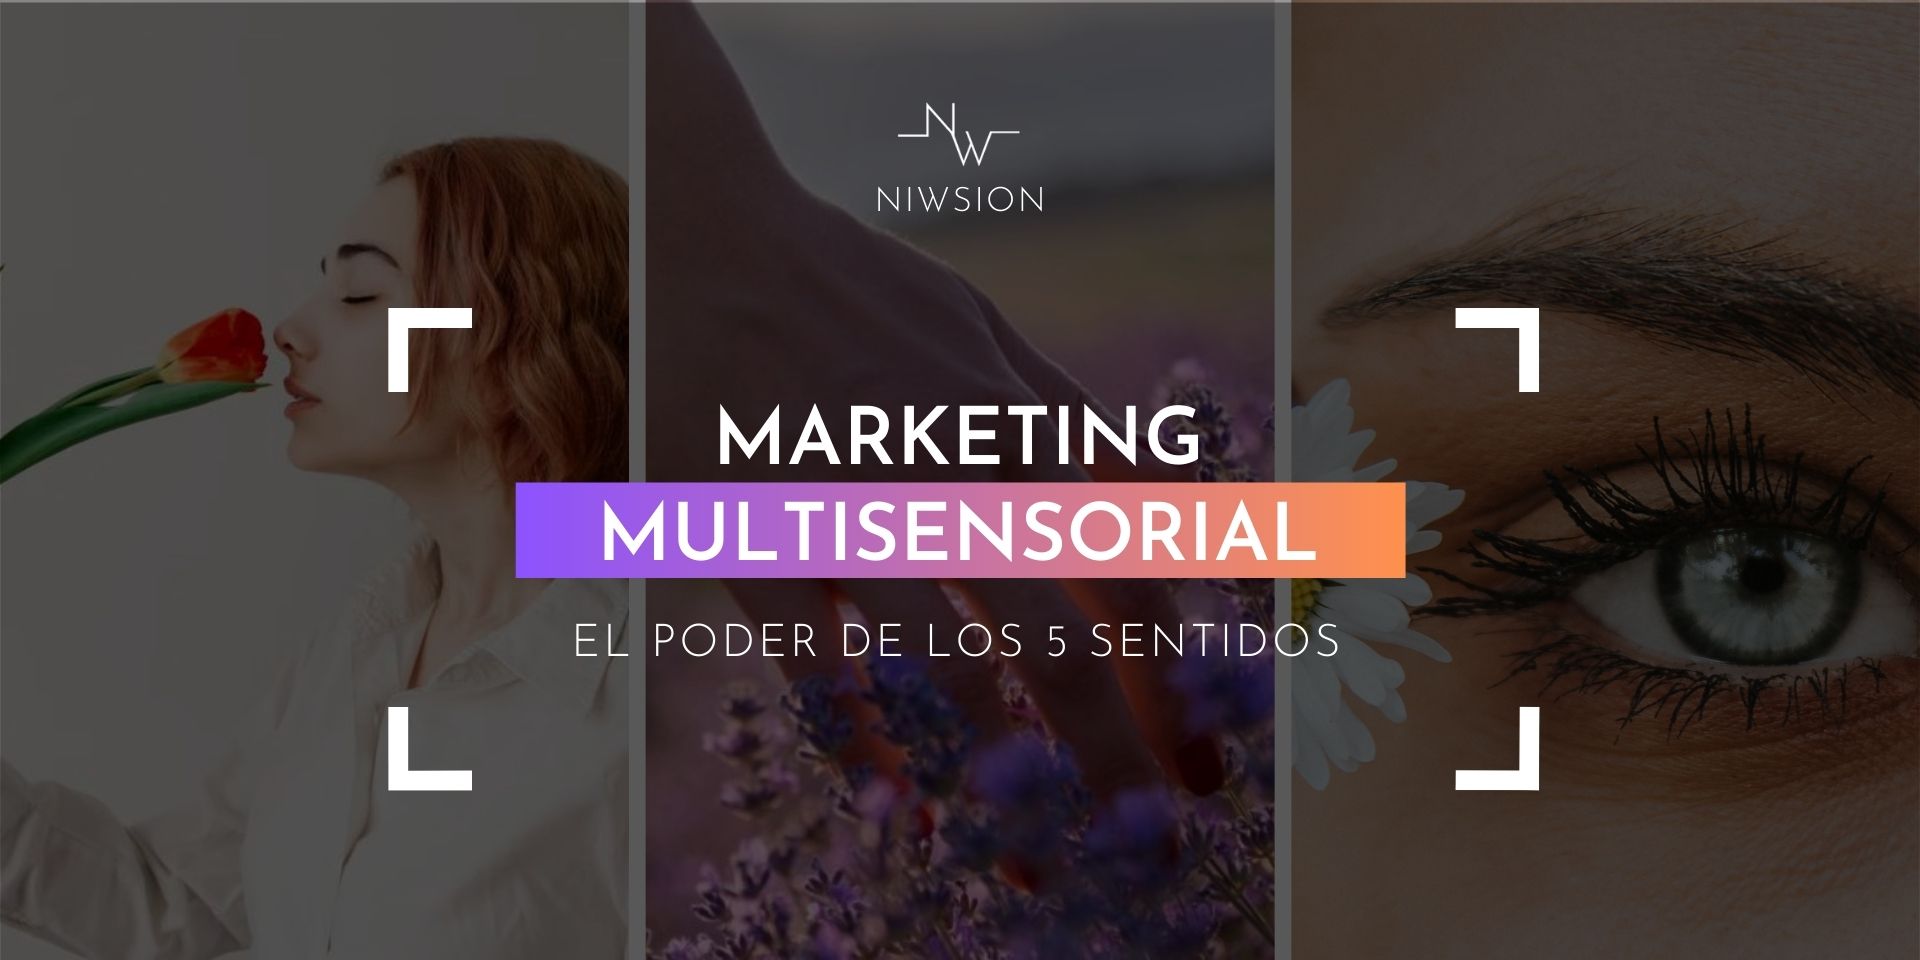 Marketing-multisensorial-Niwsion-blog